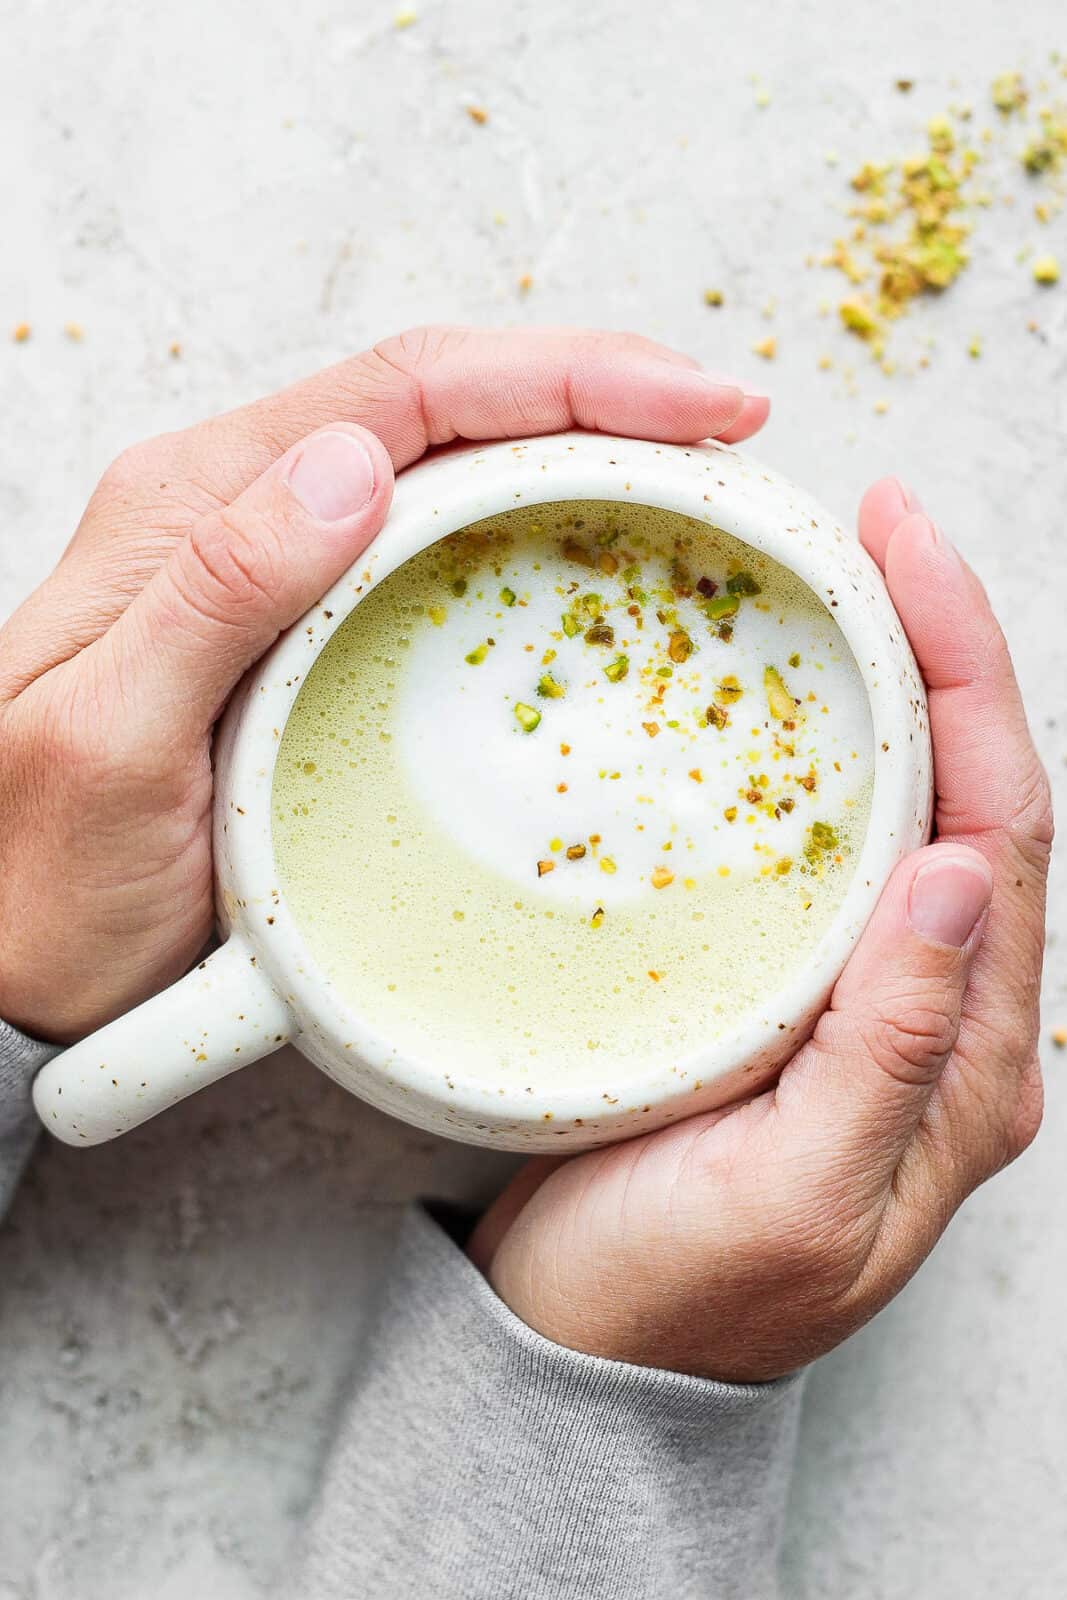 Hands holding a pistachio latte in a mug.